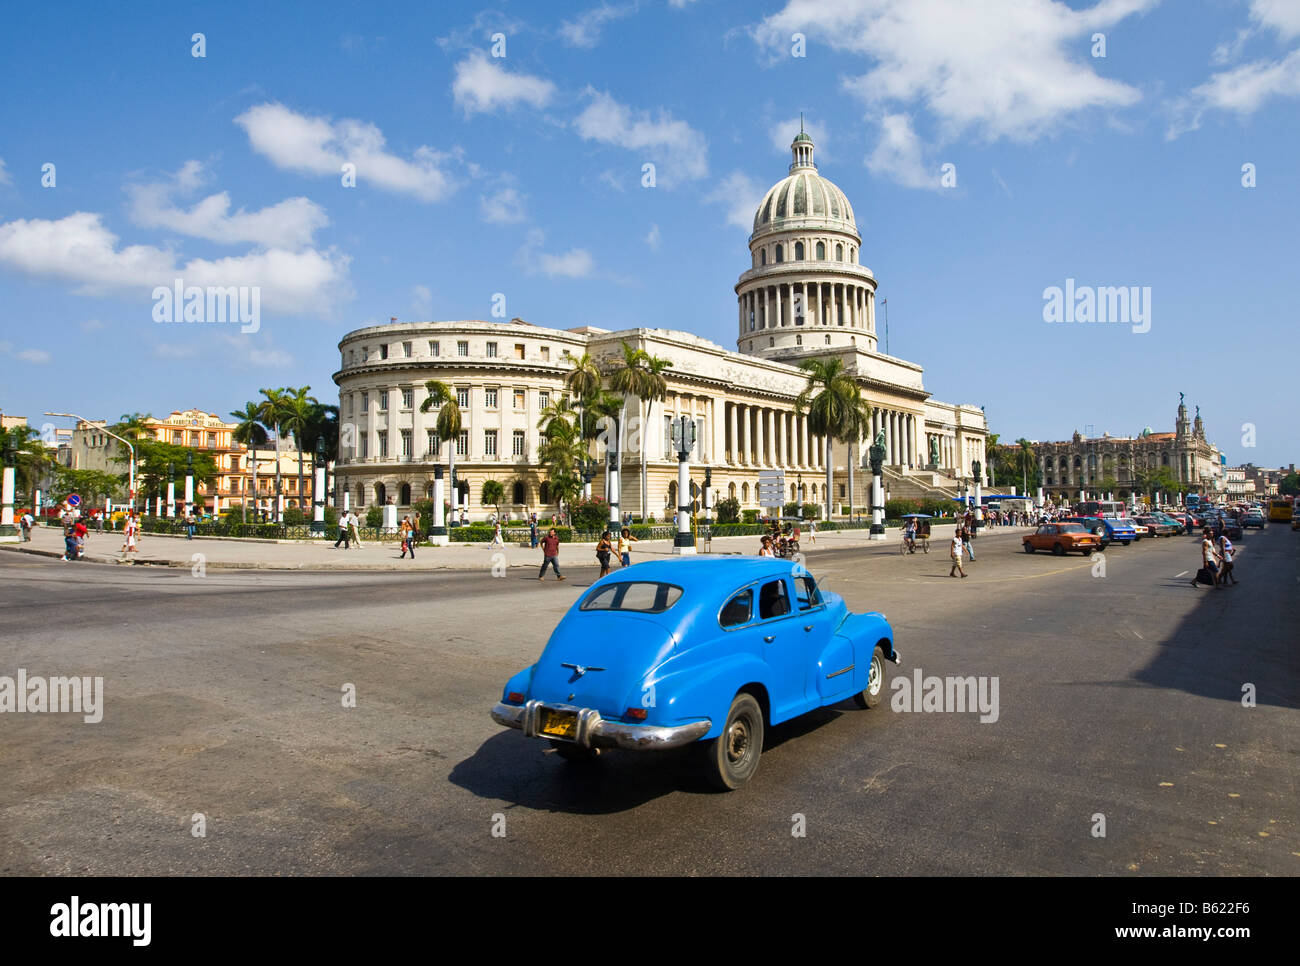 El Capitolio, National Capitol Building, Capitol Square, Kuba, Karibik Stockfoto